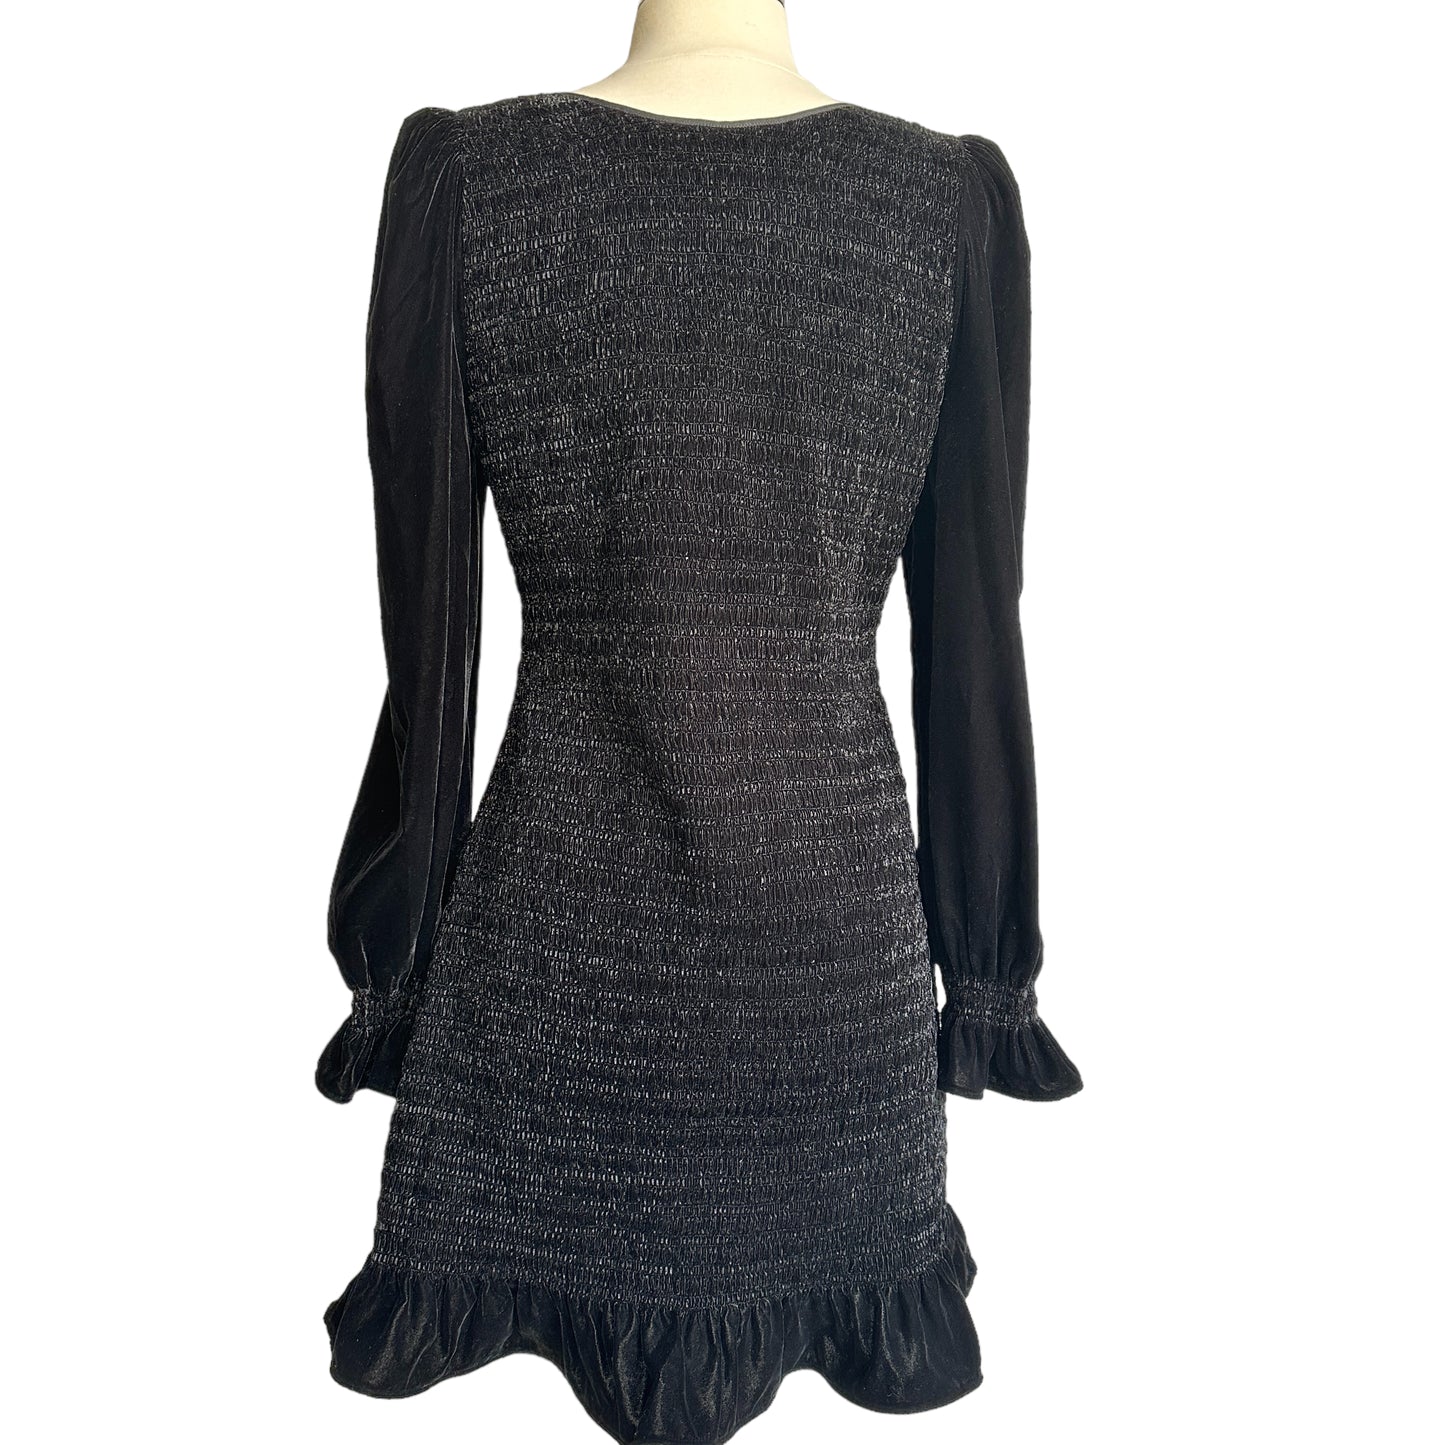 Black Velvet Mini Dress - L